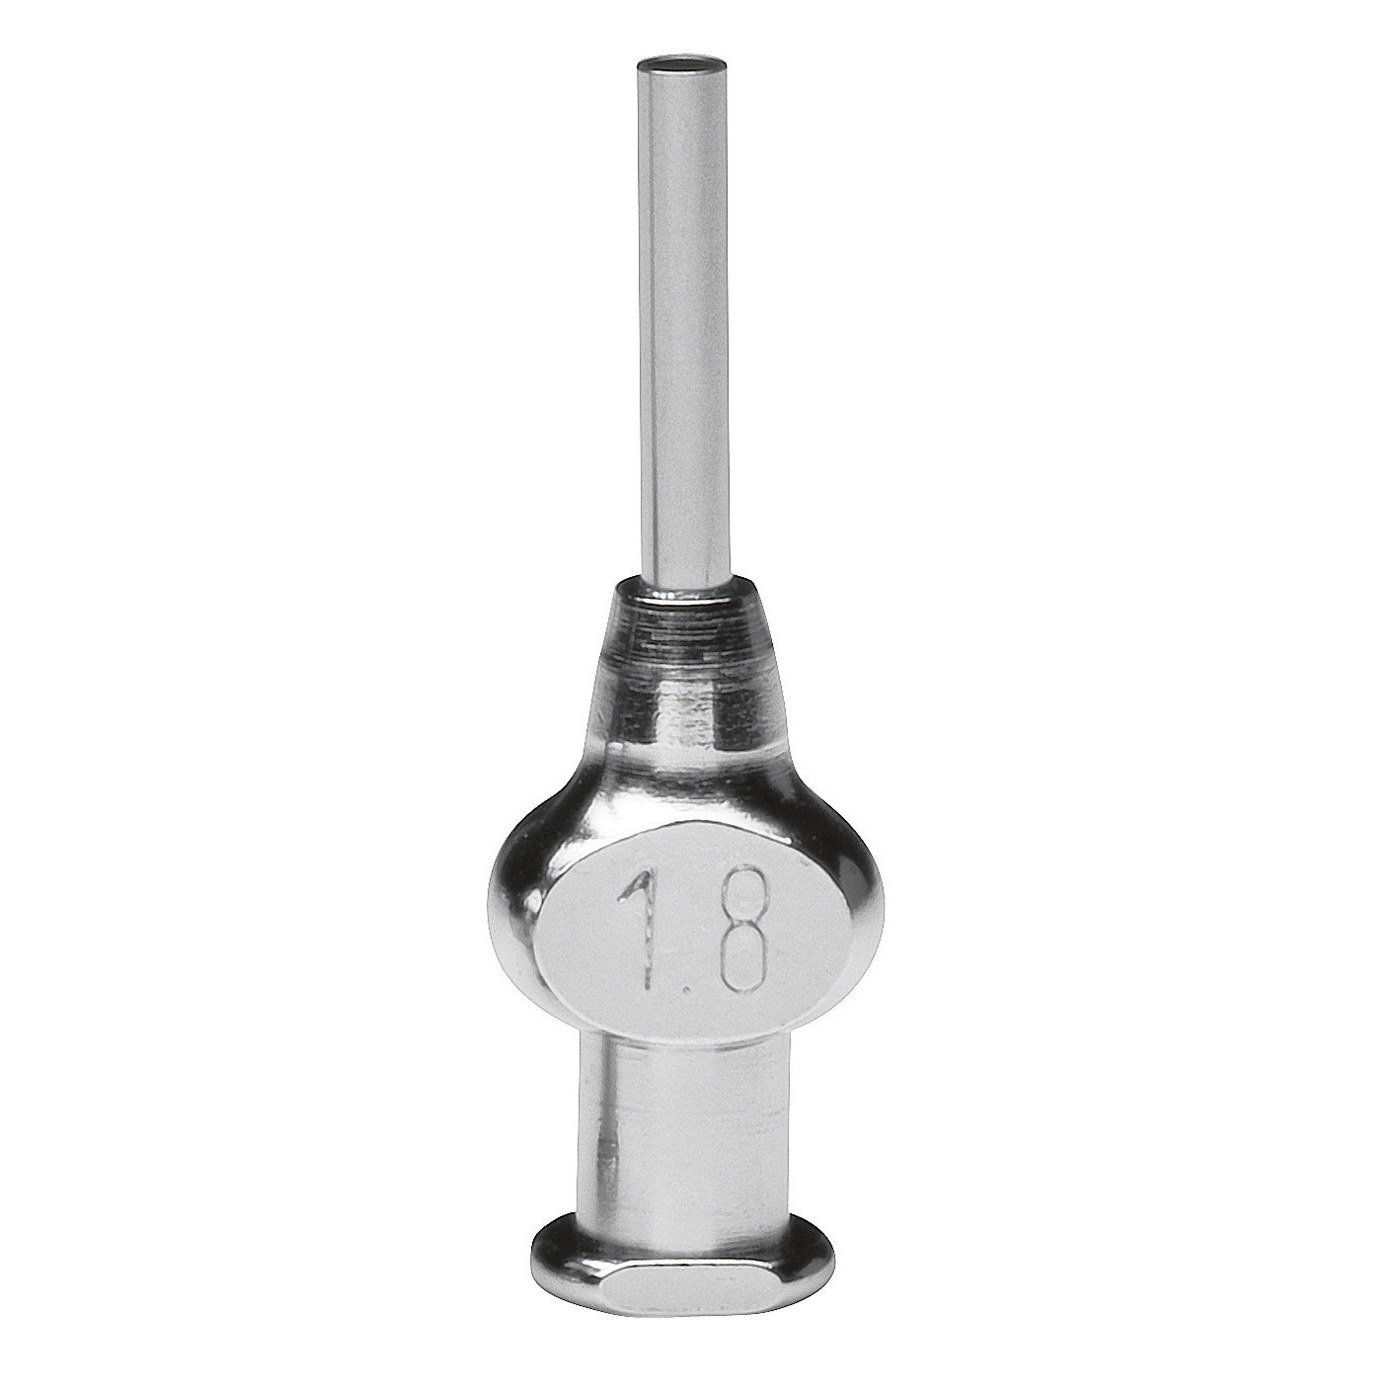 microflame burner nozzles, ø 1.8 x 10 mm (G15) - 5 pieces